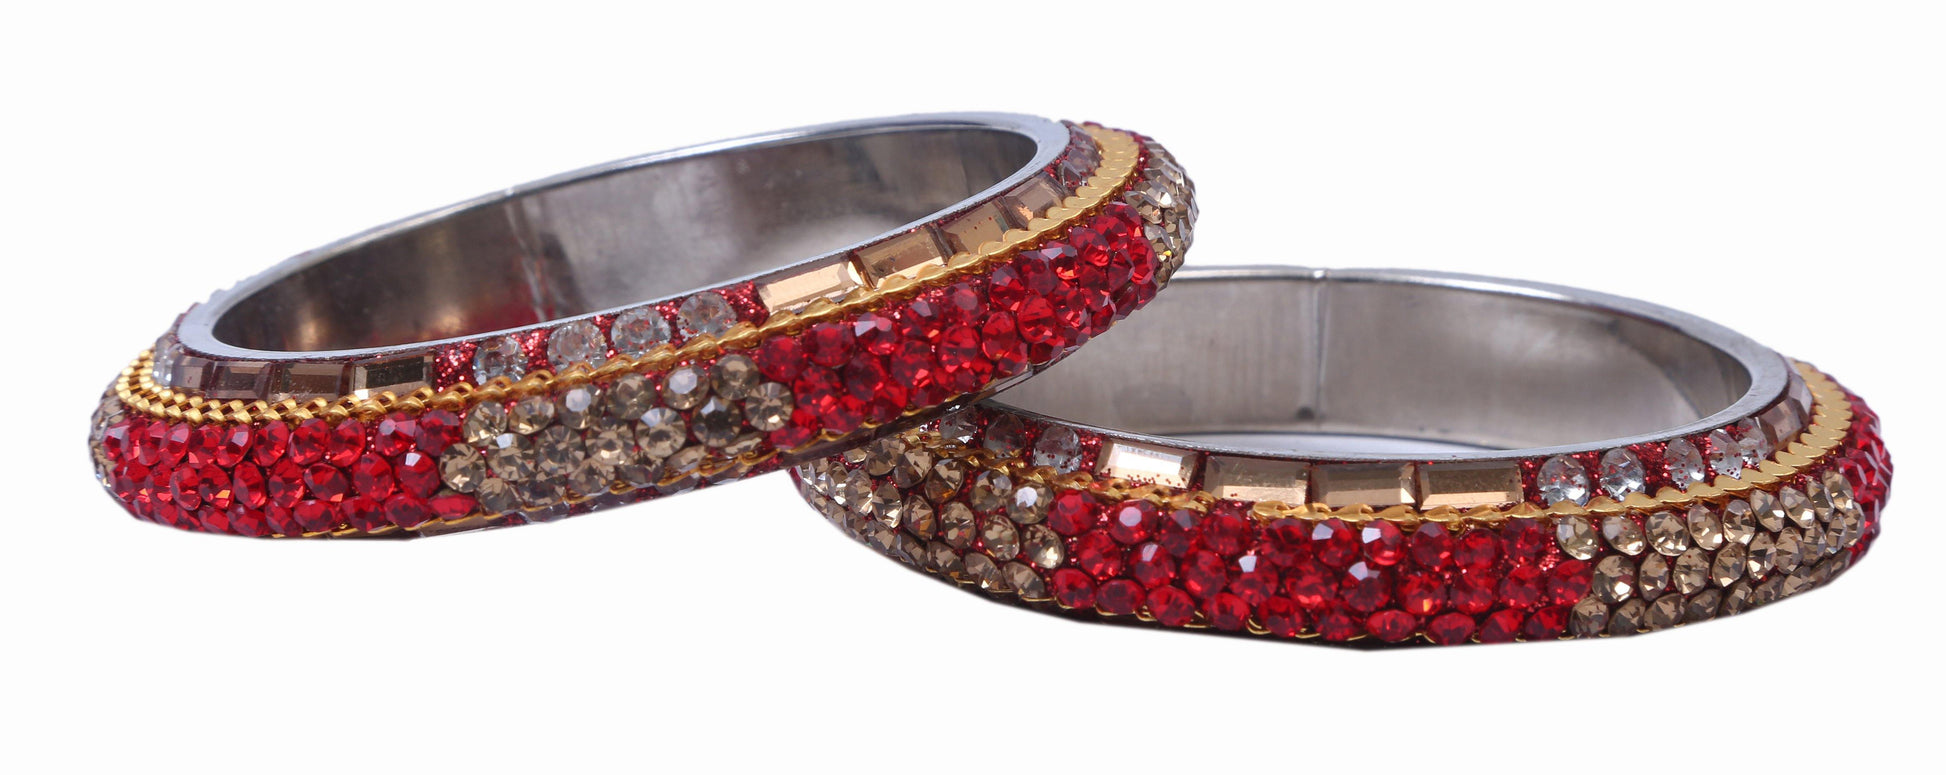 sukriti bollywood fashion stylish party-wear red brass bangles bracelet for women & girls - set of 2